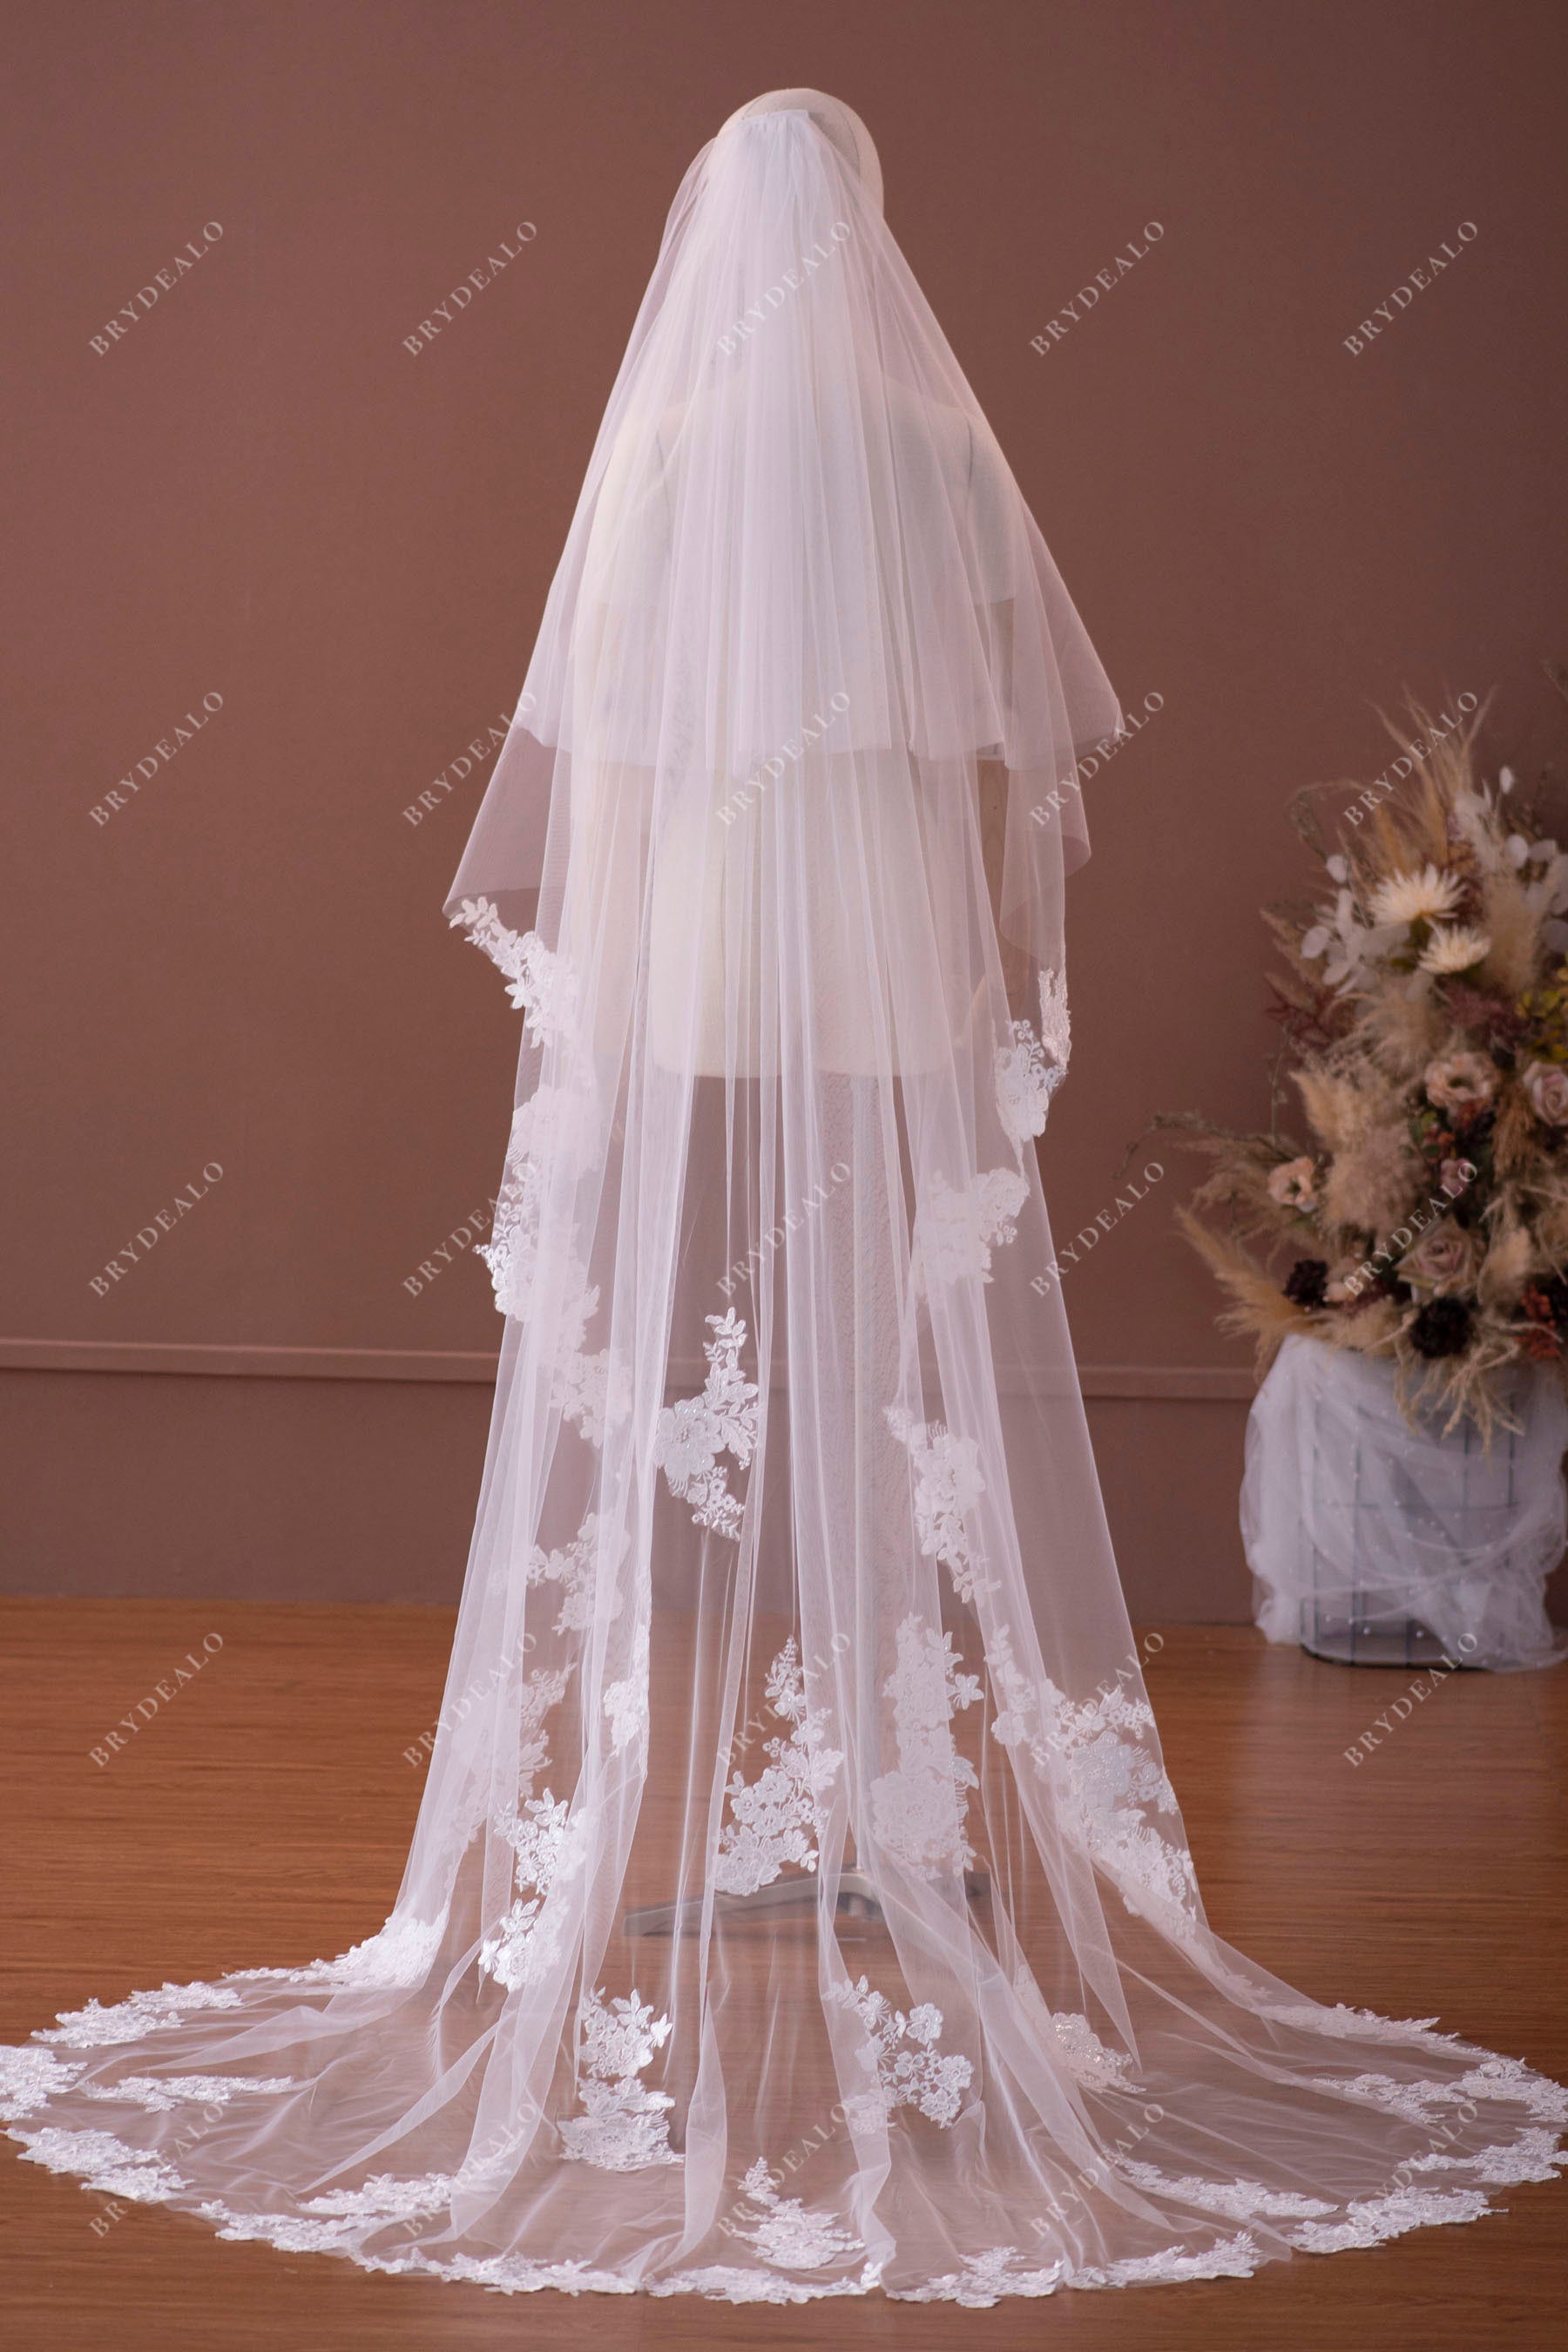 https://cdn.shopify.com/s/files/1/0558/7599/3647/products/chapel-length-flower-lace-tulle-bridal-veil.jpg?v=1651330727&width=1800